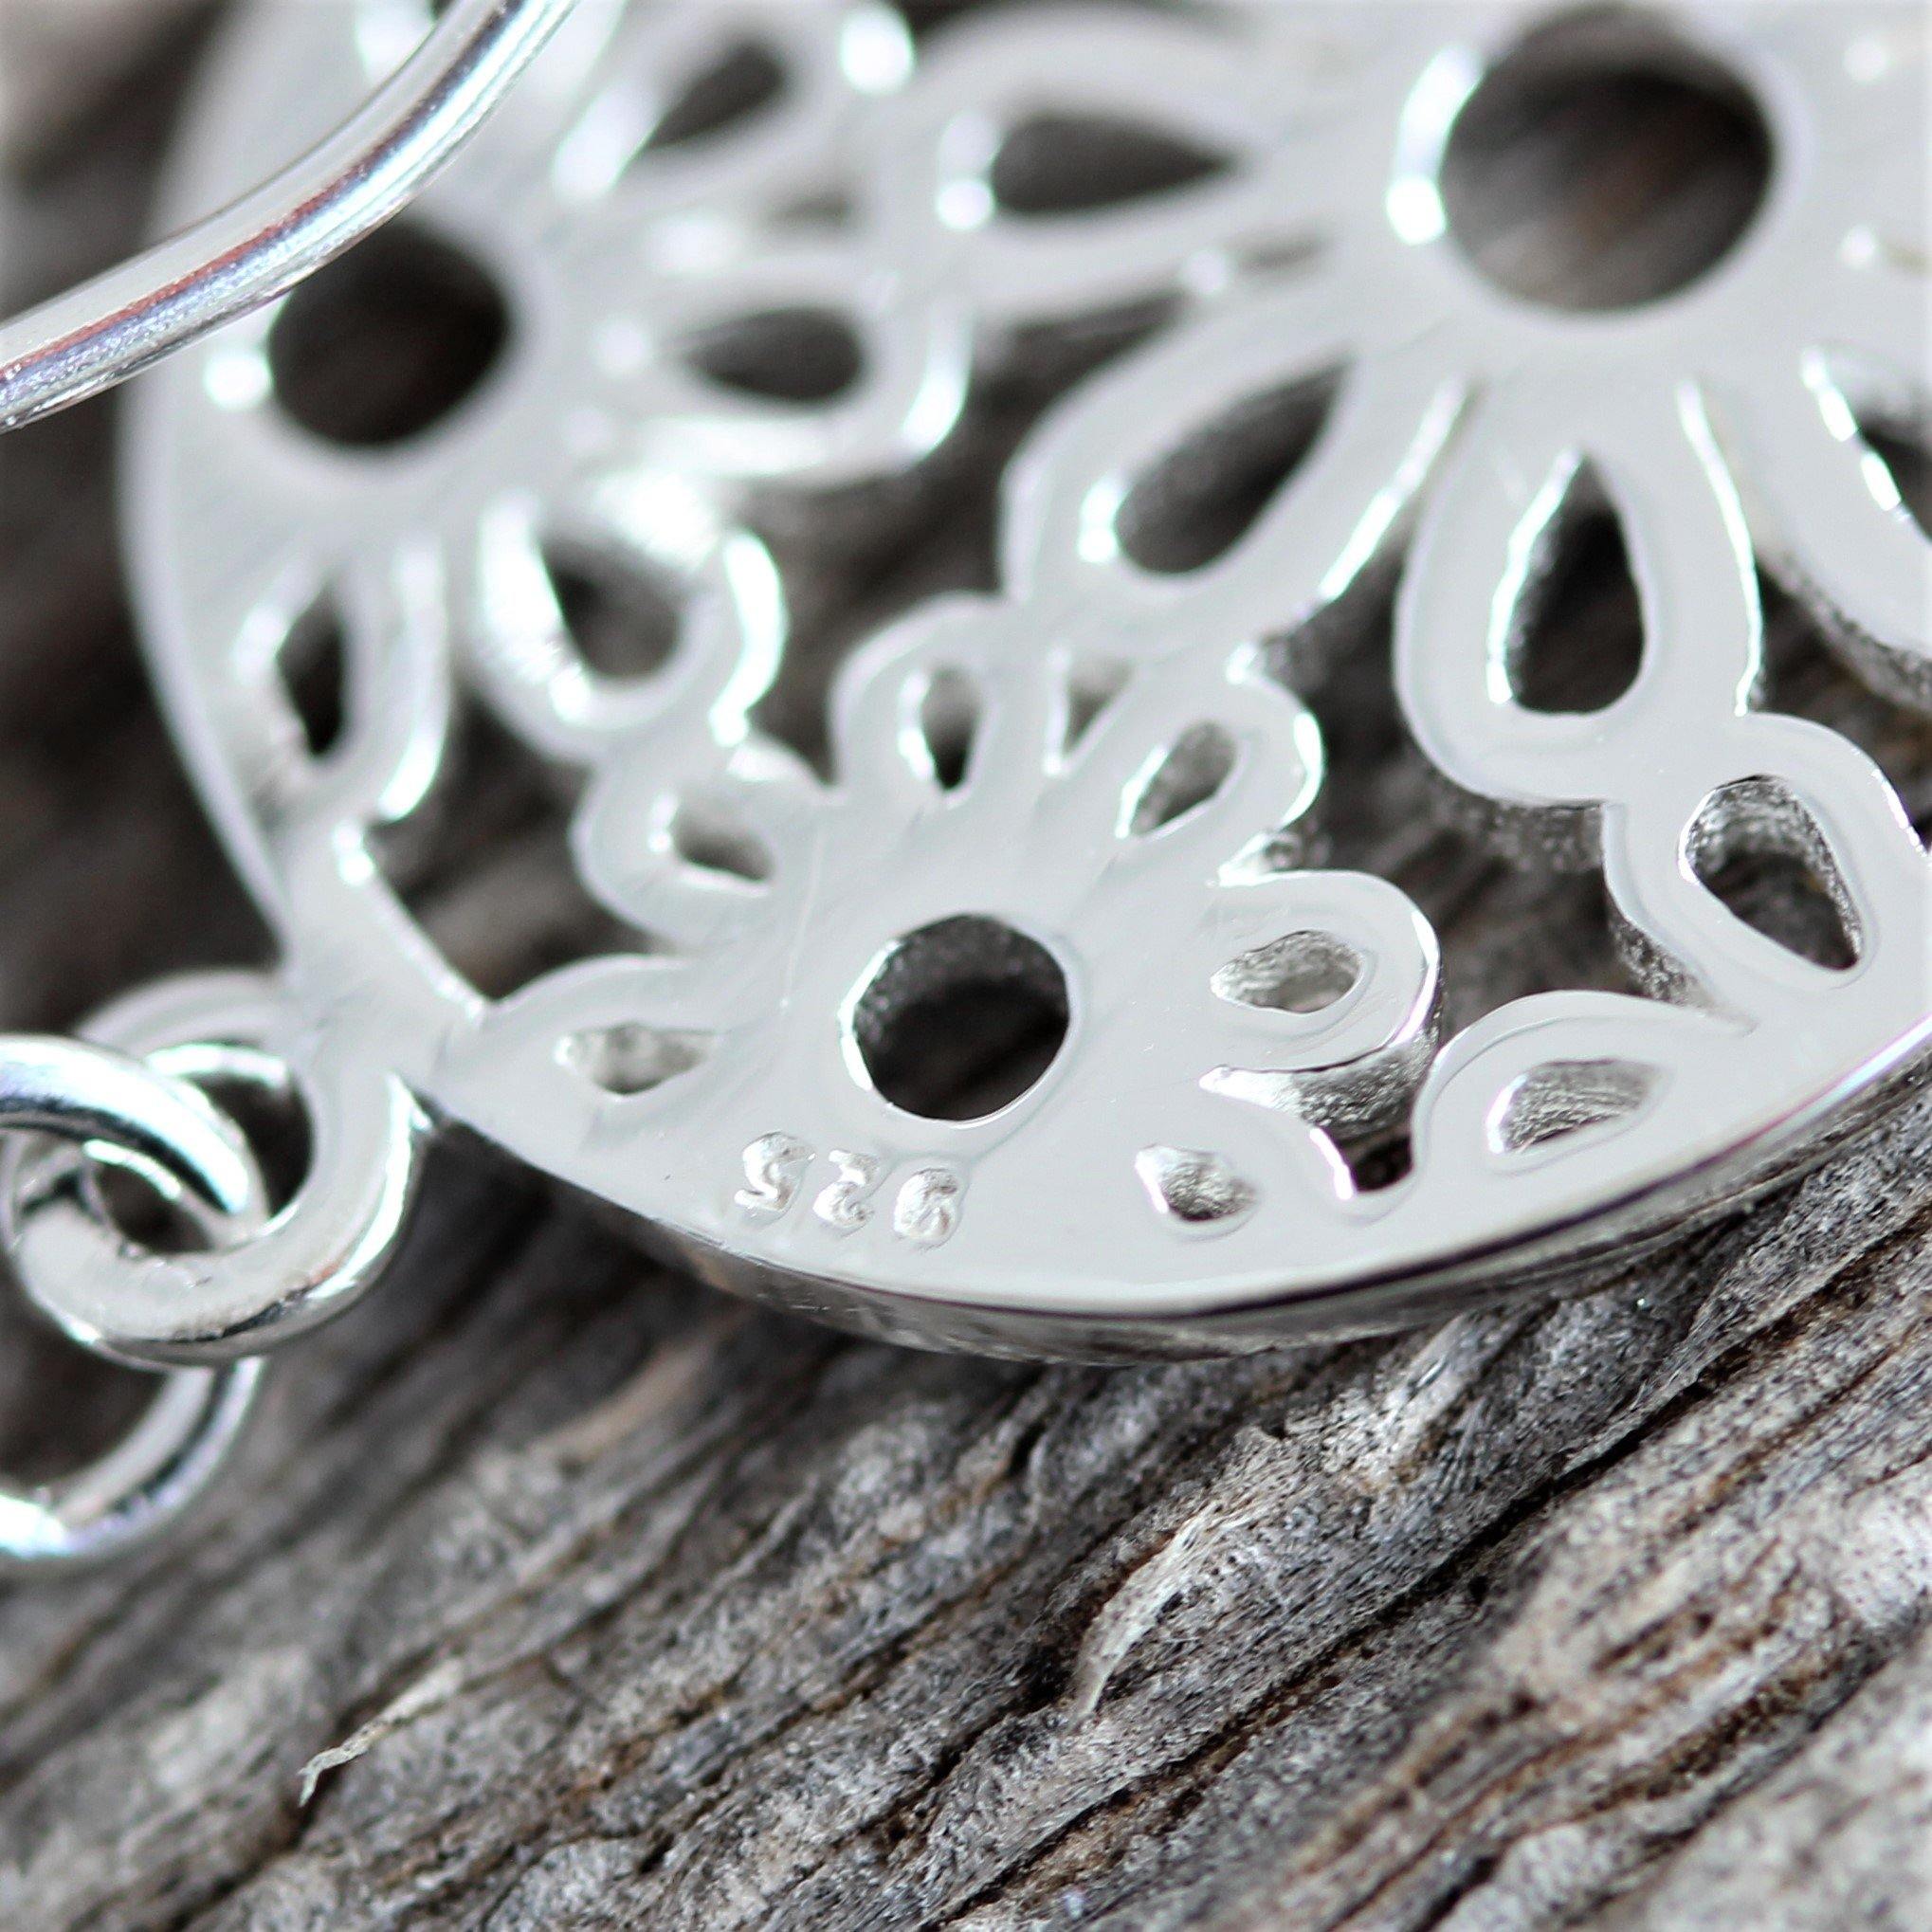 Sterling Silver Cut Out Flower 16mm Round Hook Drop Dangle Earrings - STERLING SILVER DESIGNS